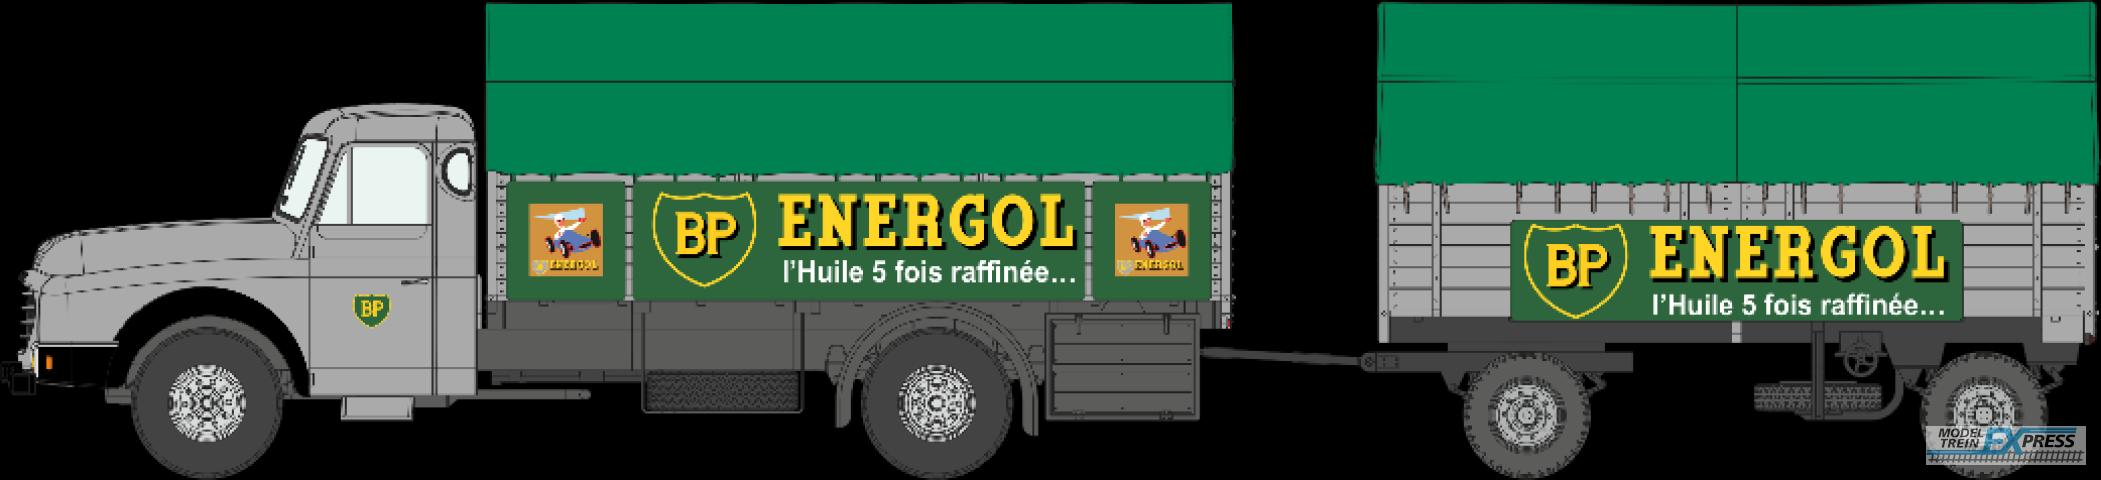 REE models CB-107 Willeme Covered Truck + Covered Trailer "ENERGOL"